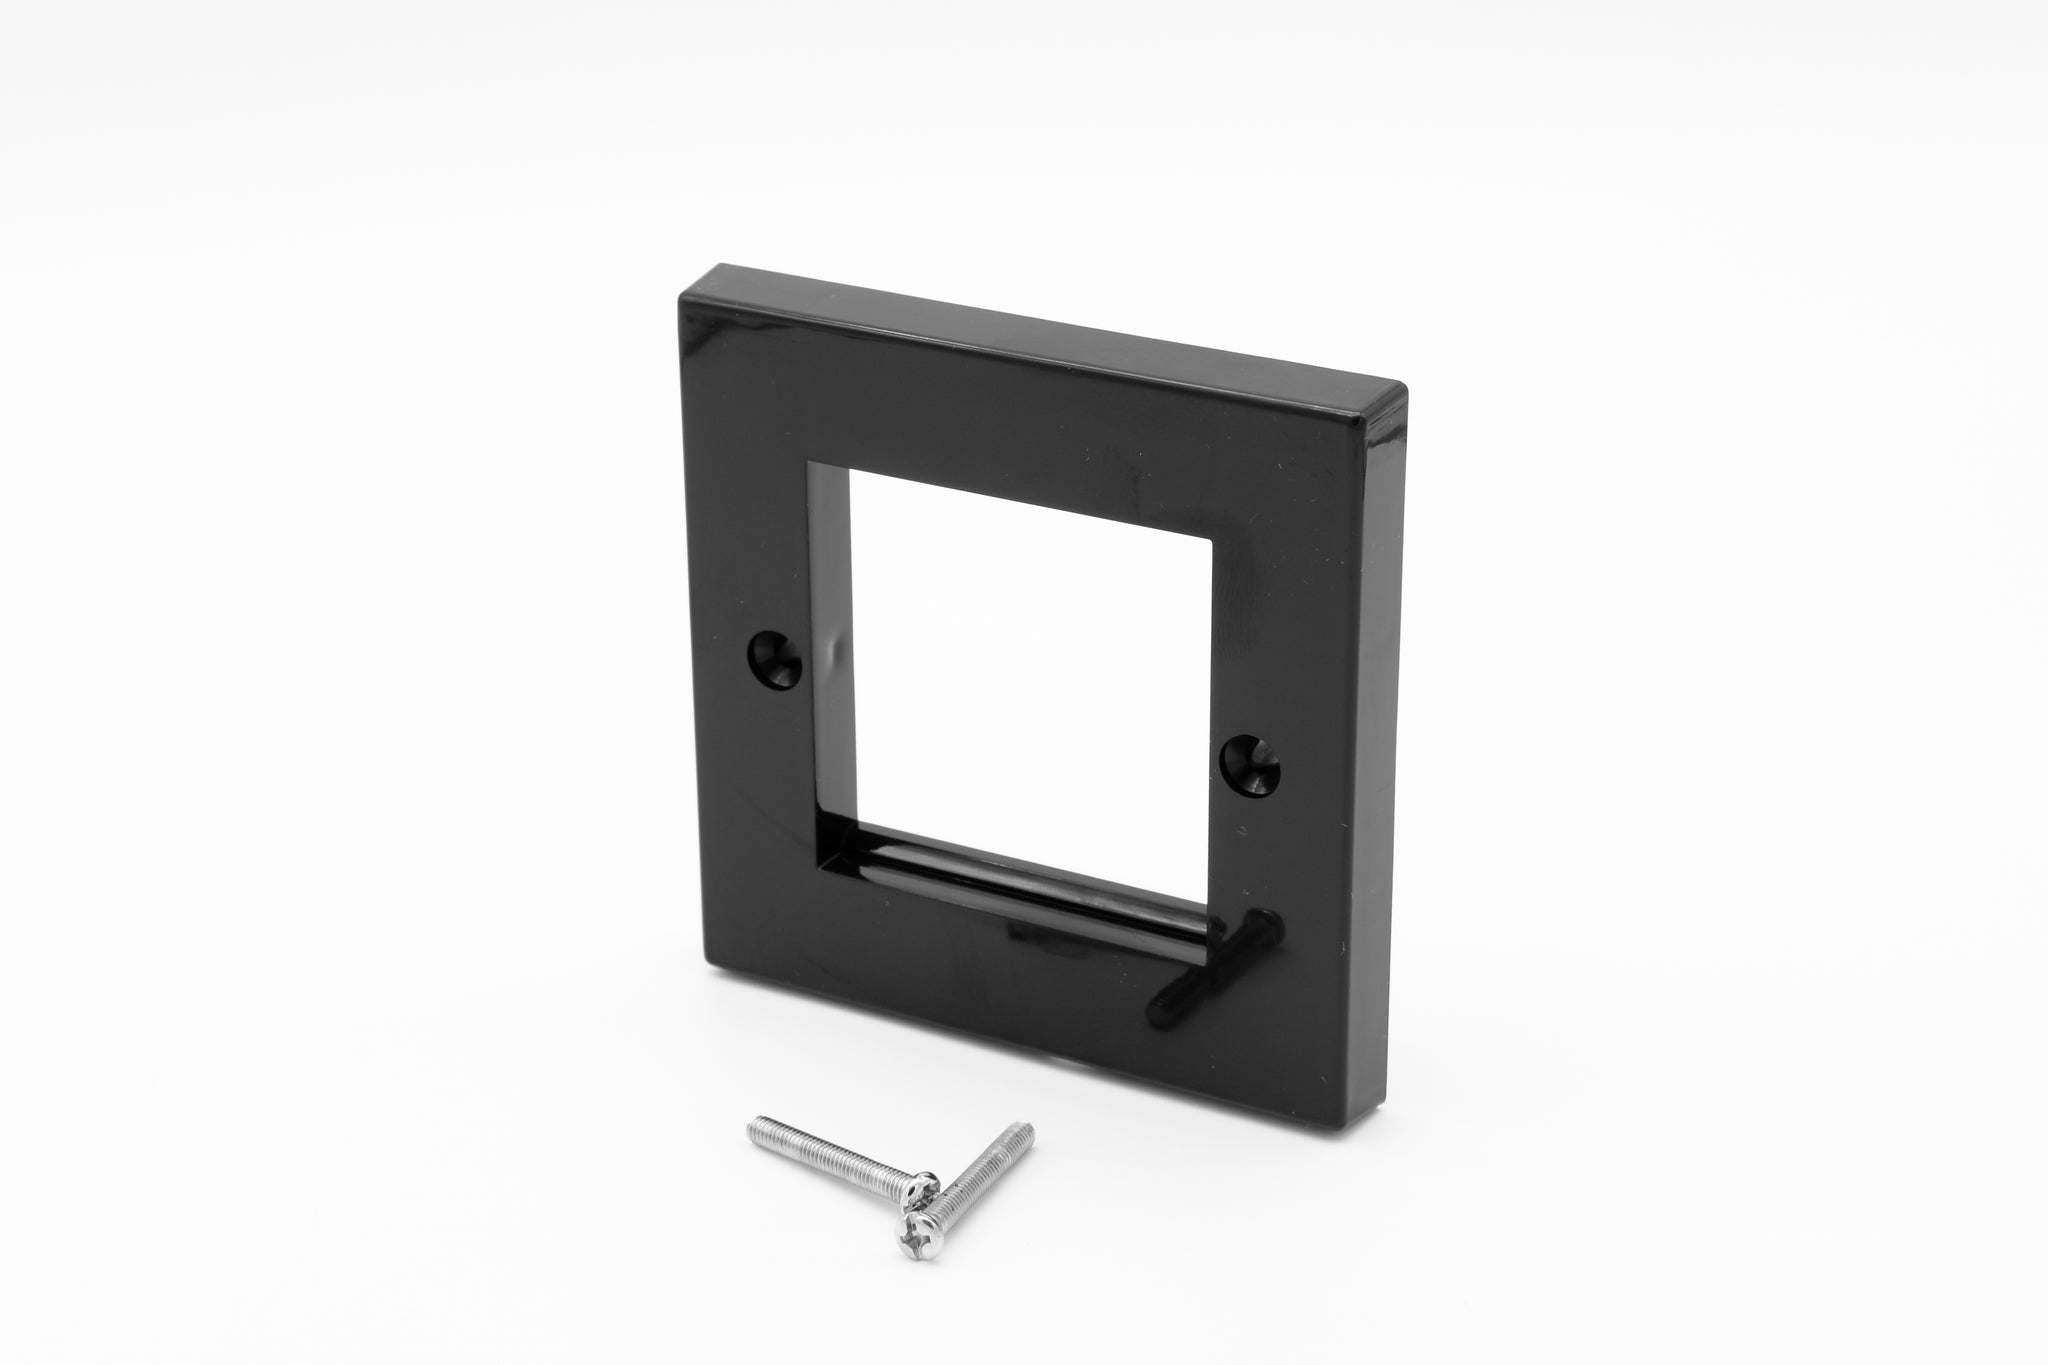 Low Profile Single Gang (2 Slot) Faceplate for 2 x Euro Modules -  Black (LP-SGFP-T-N-BLK)